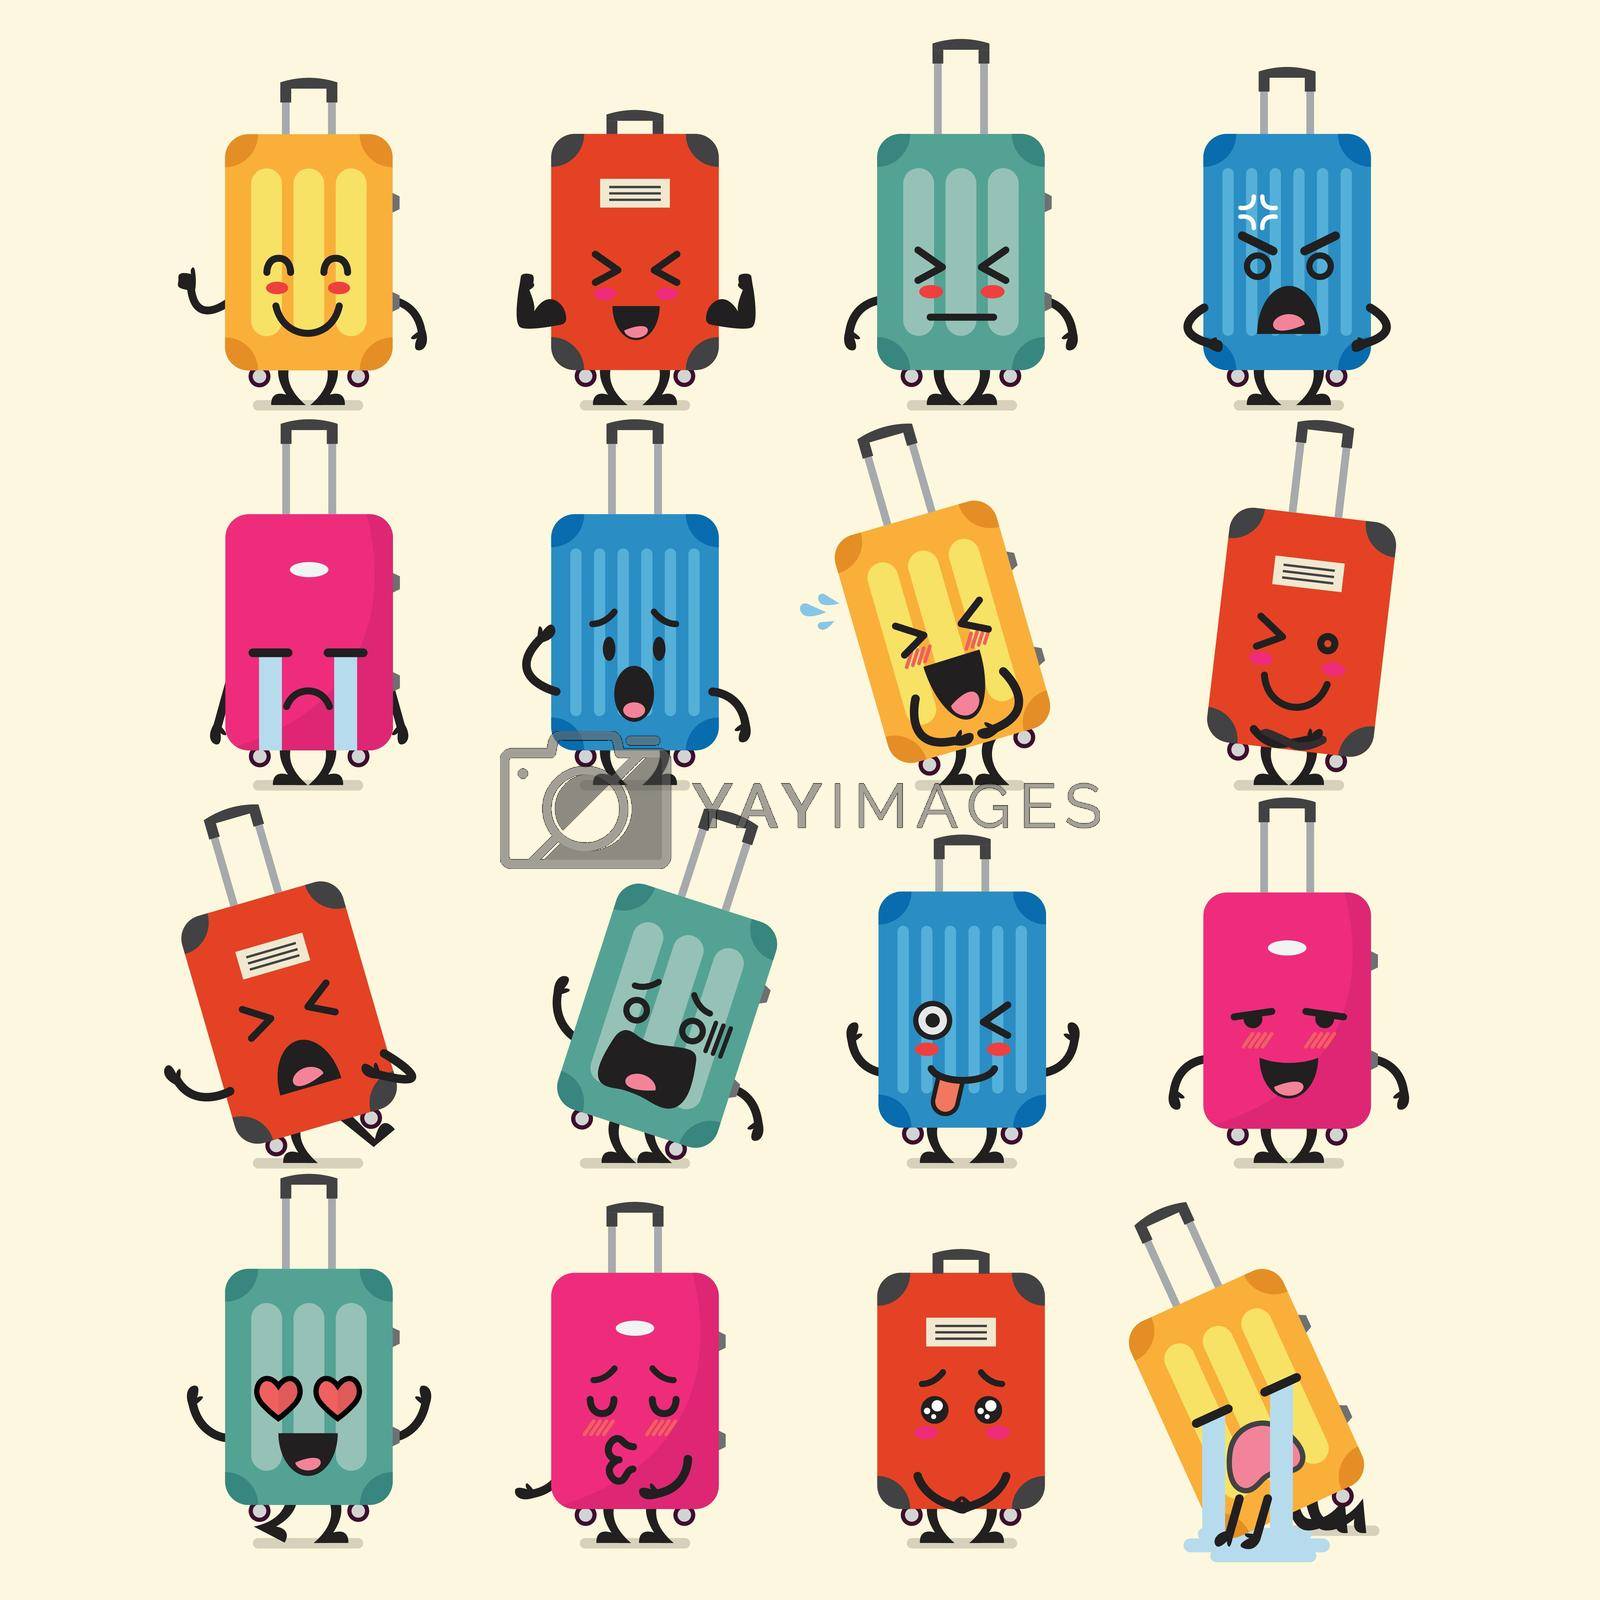 Travel luggage character emoji set. Funny cartoon emoticons